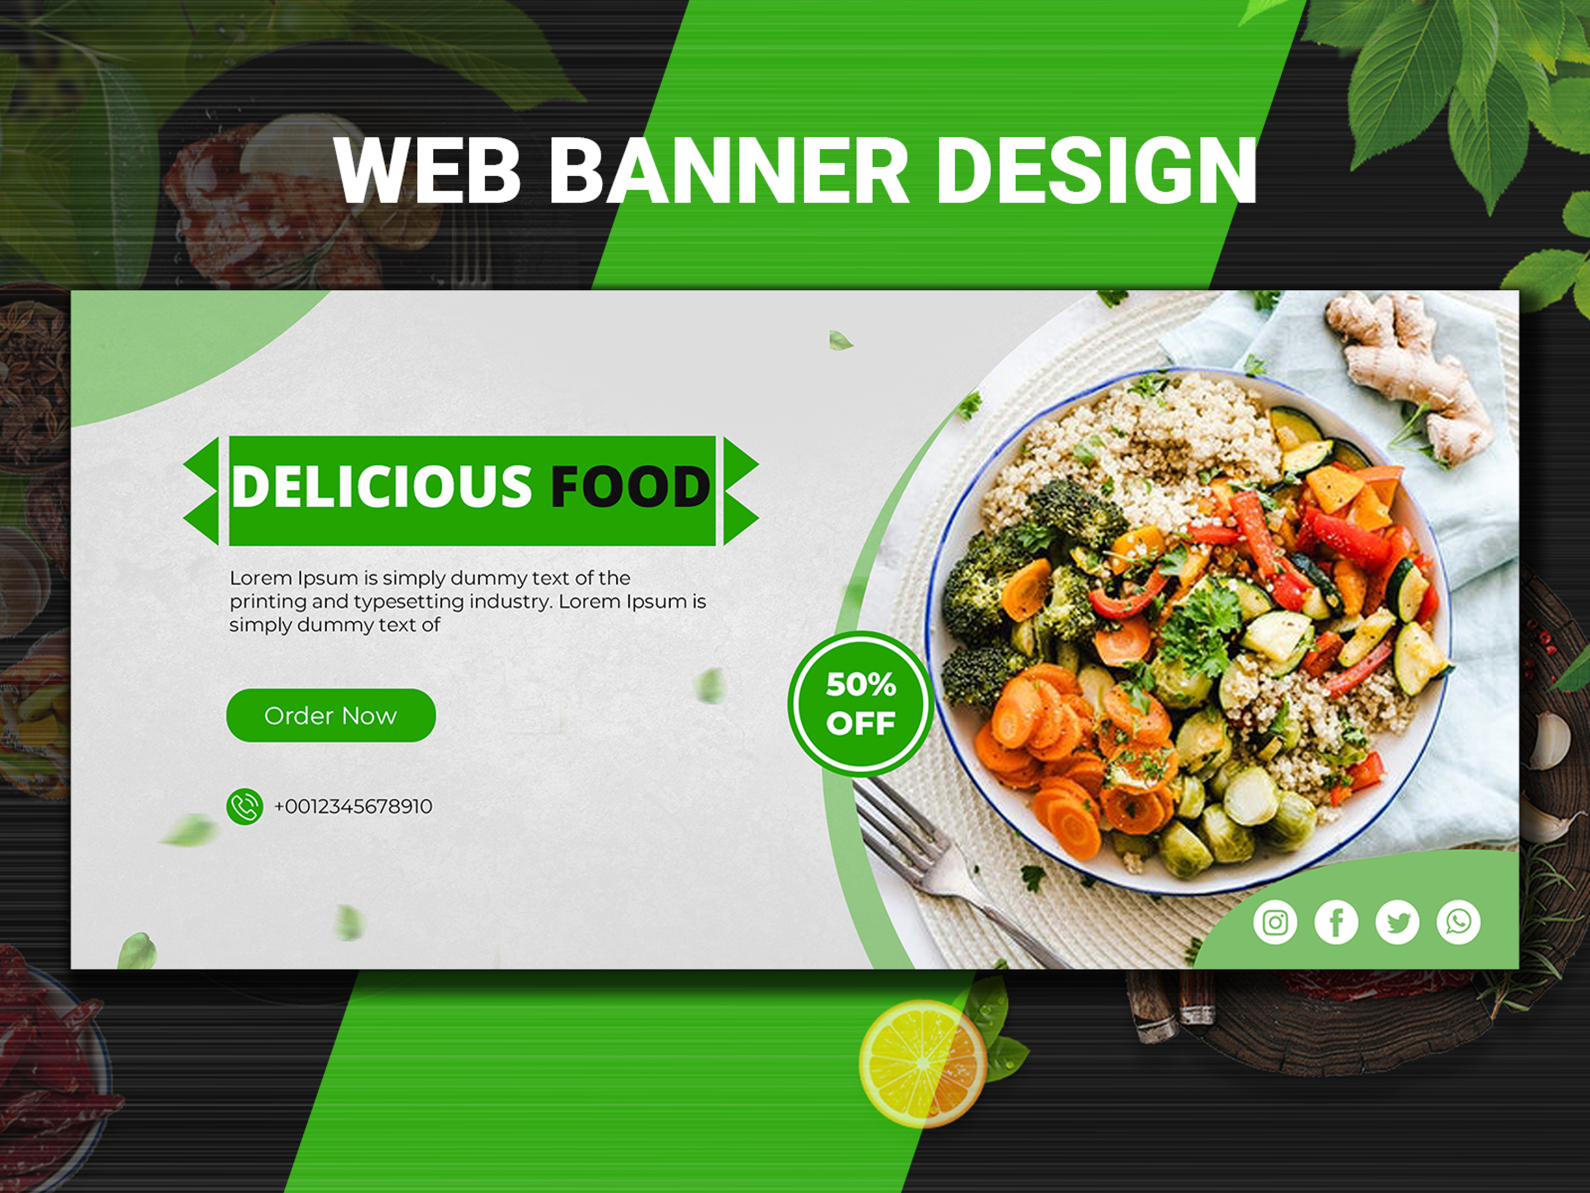 food-website-banner-design-by-gfx-sabina-on-dribbble